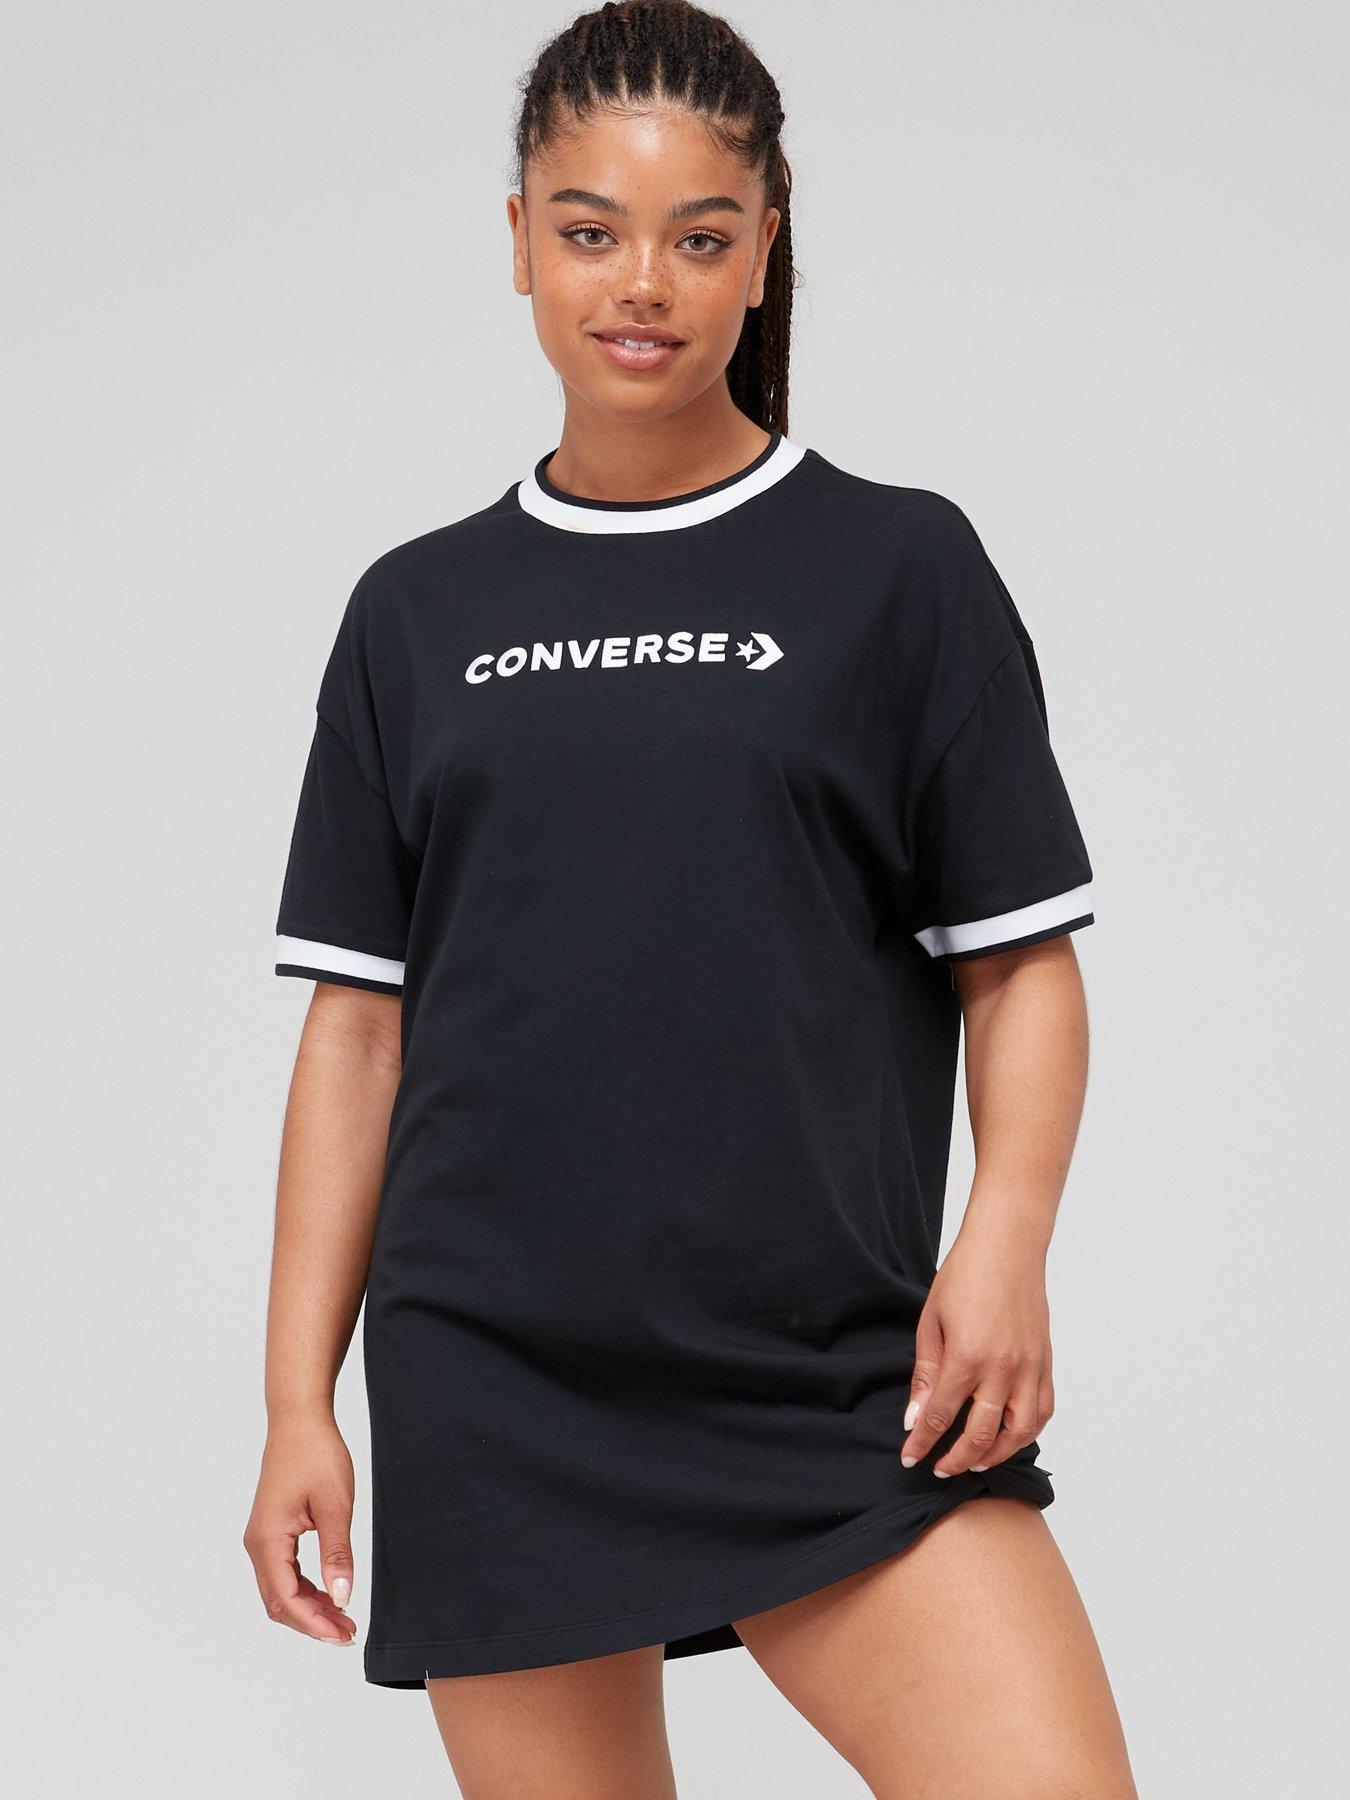 T-Shirt Black Dress Wordmark Converse -